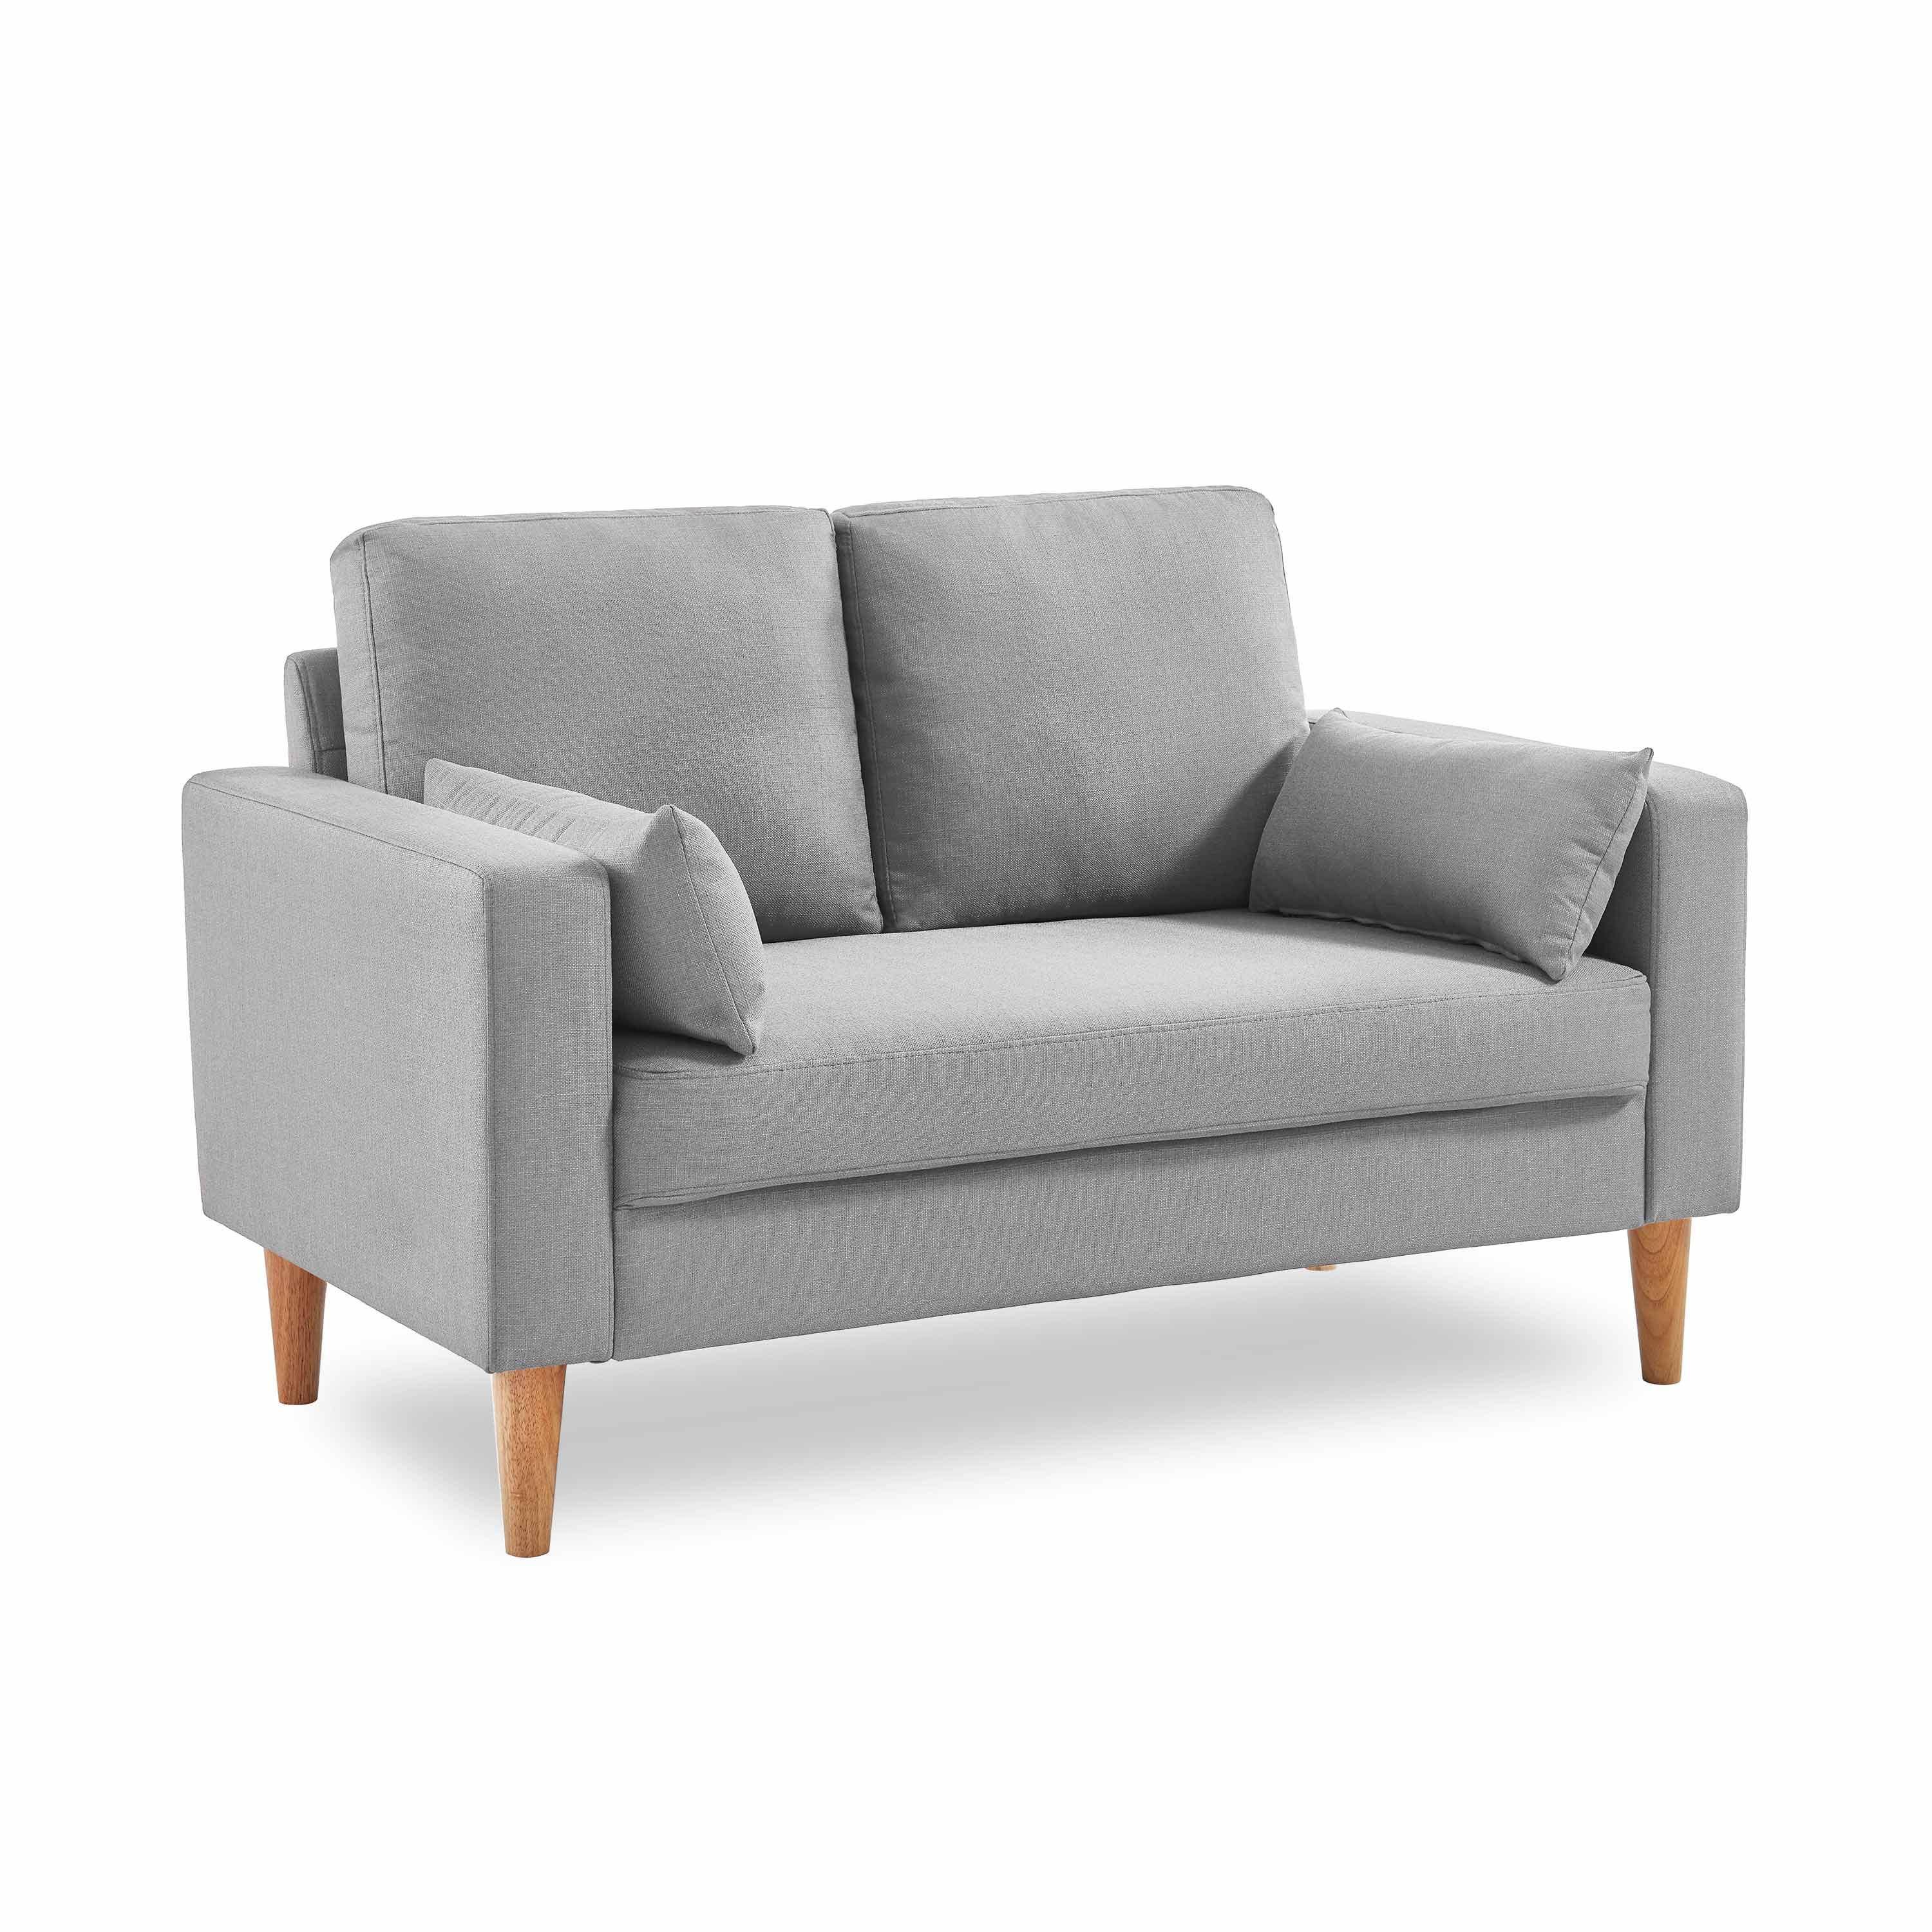 Medium 2-seater sofa Scandi-style with wooden legs - Bjorn - Light Grey Photo2